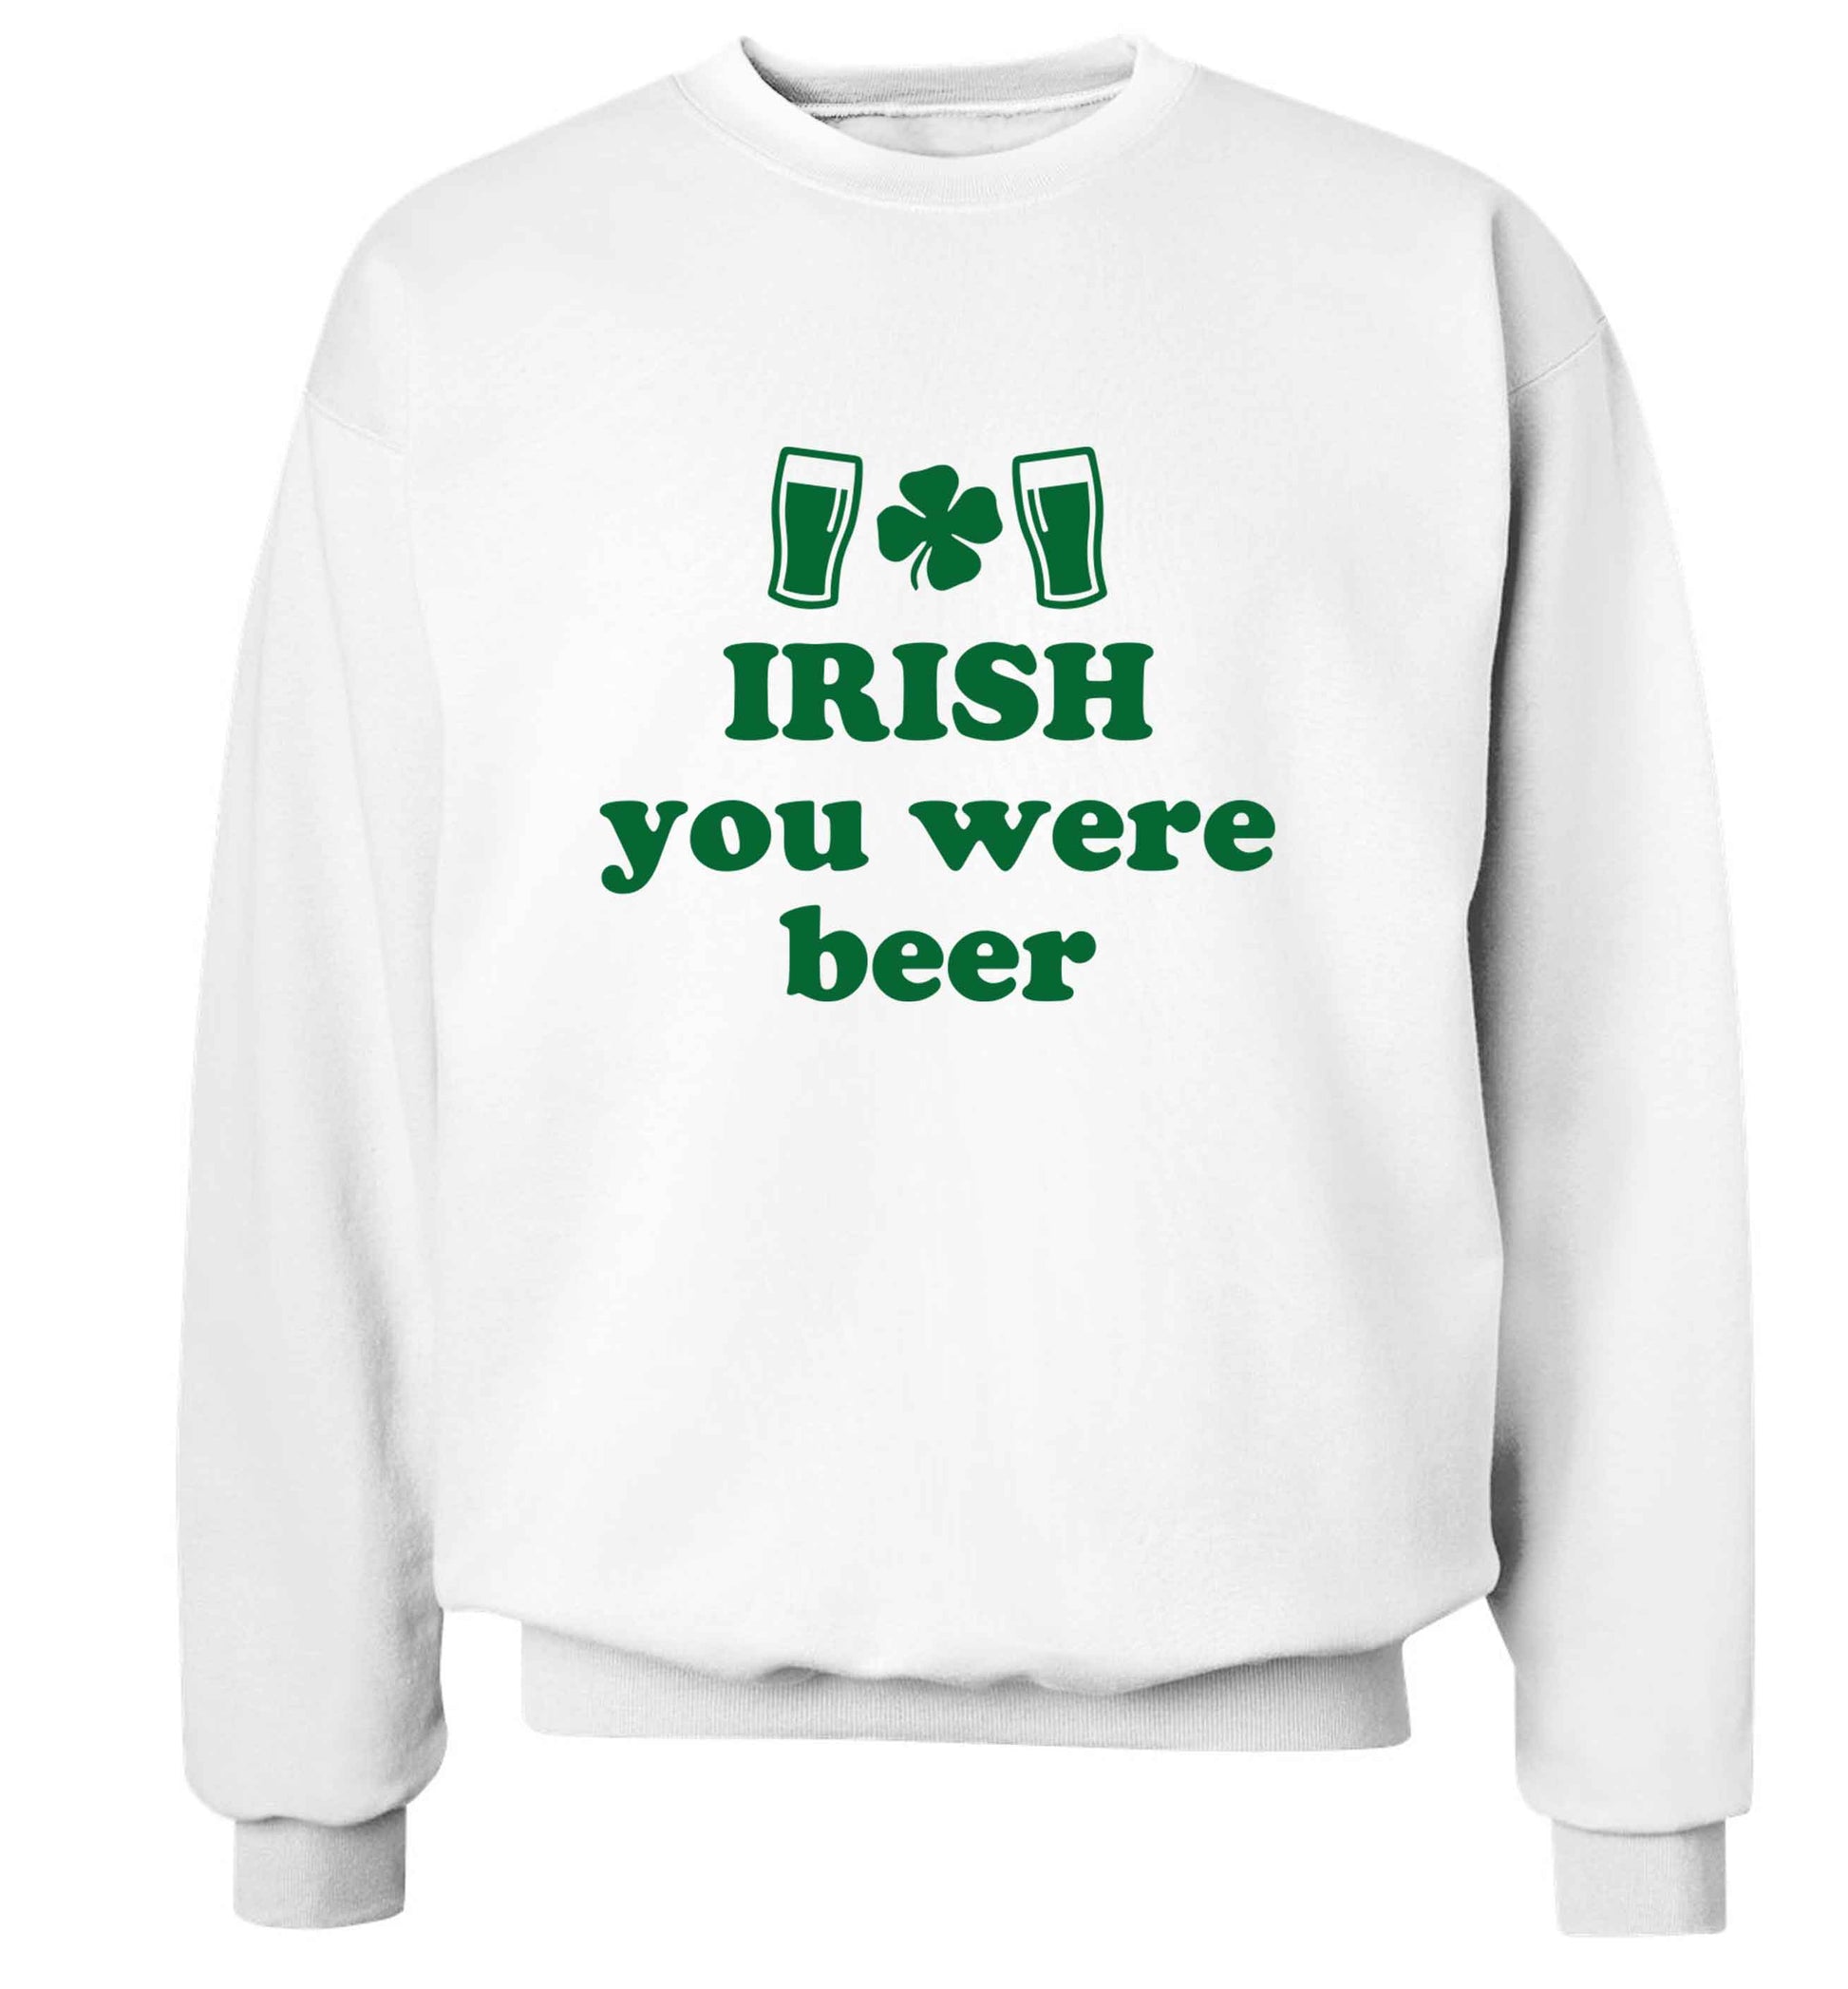 Irish you were beer adult's unisex white sweater 2XL